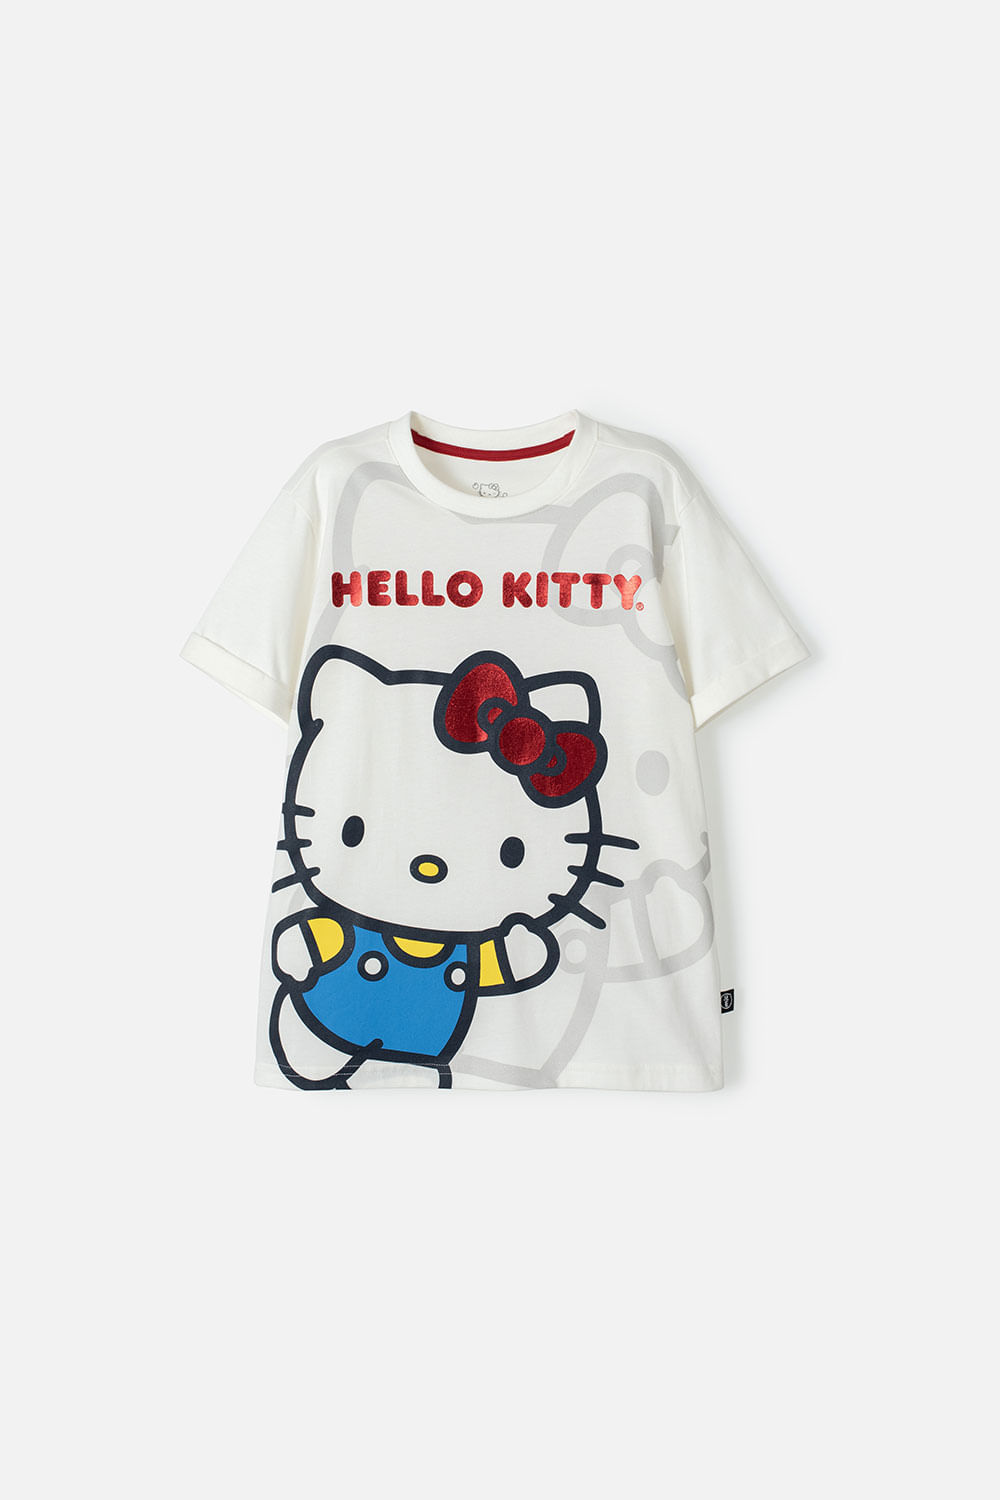 Camiseta de Hello Kitty marfil manga corta para niña 4-0